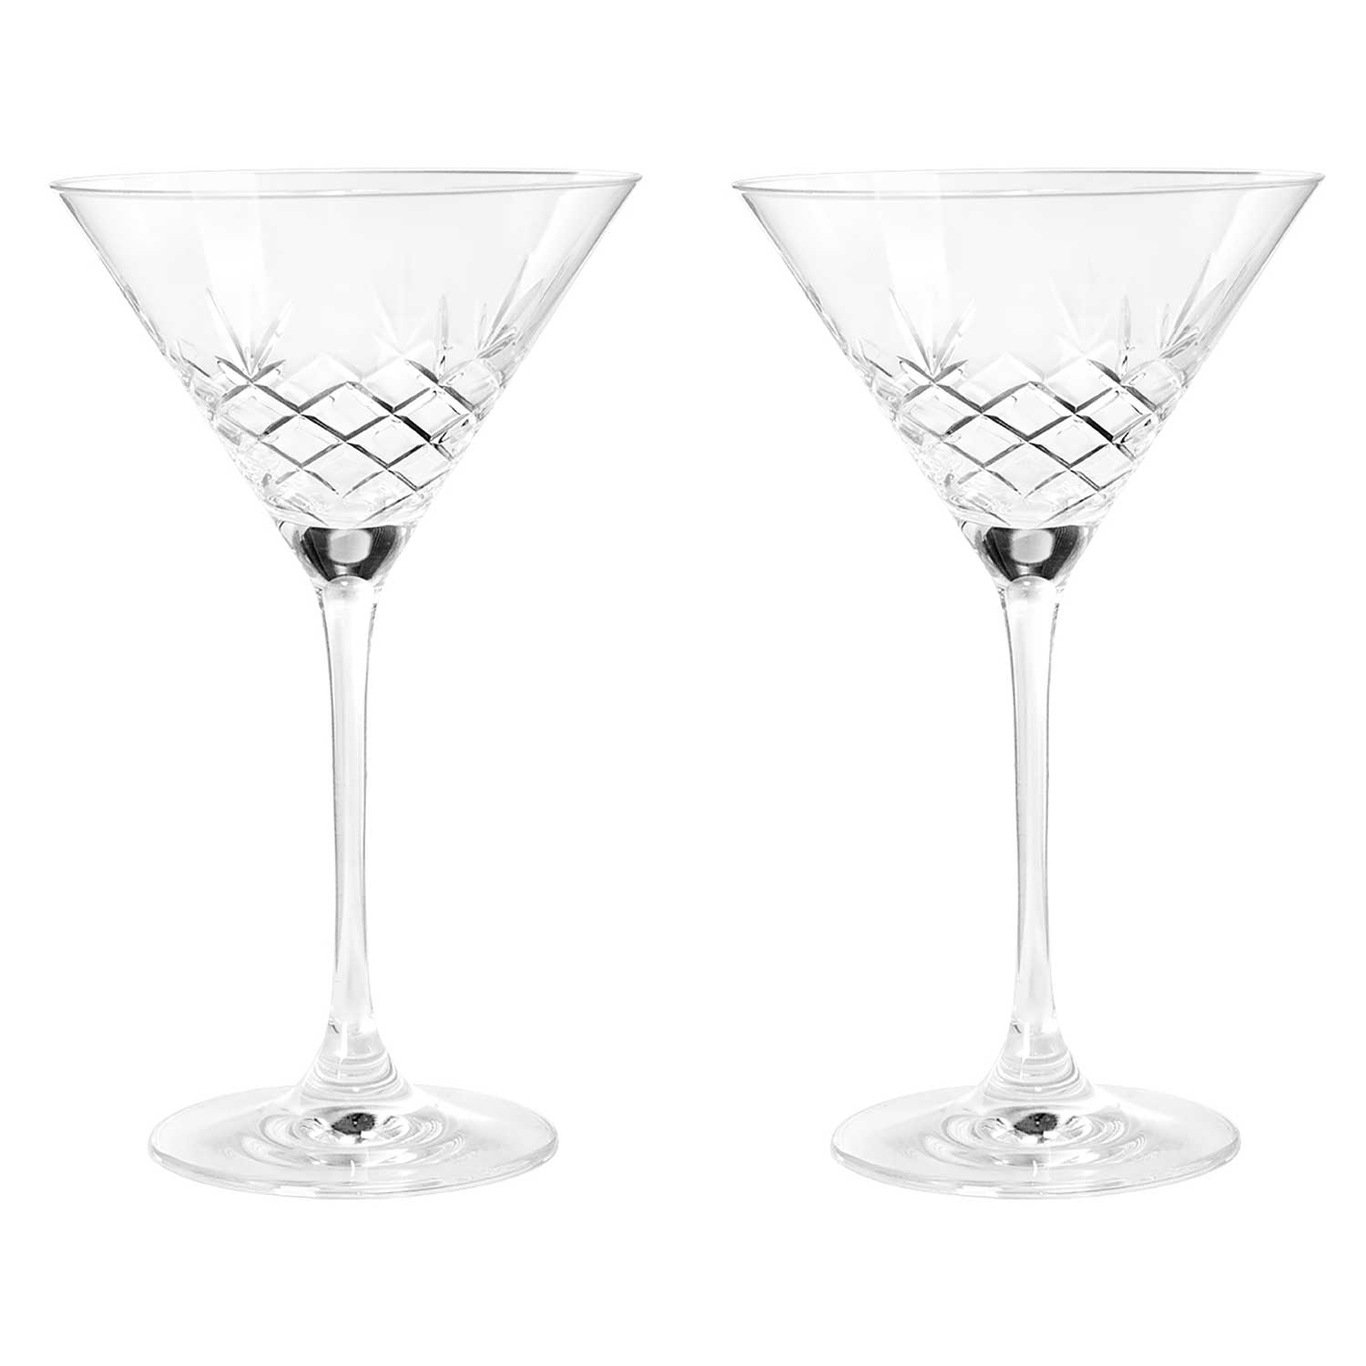 https://royaldesign.com/image/2/frederik-bagger-crispy-cocktail-glass-2-pcs-0?w=800&quality=80